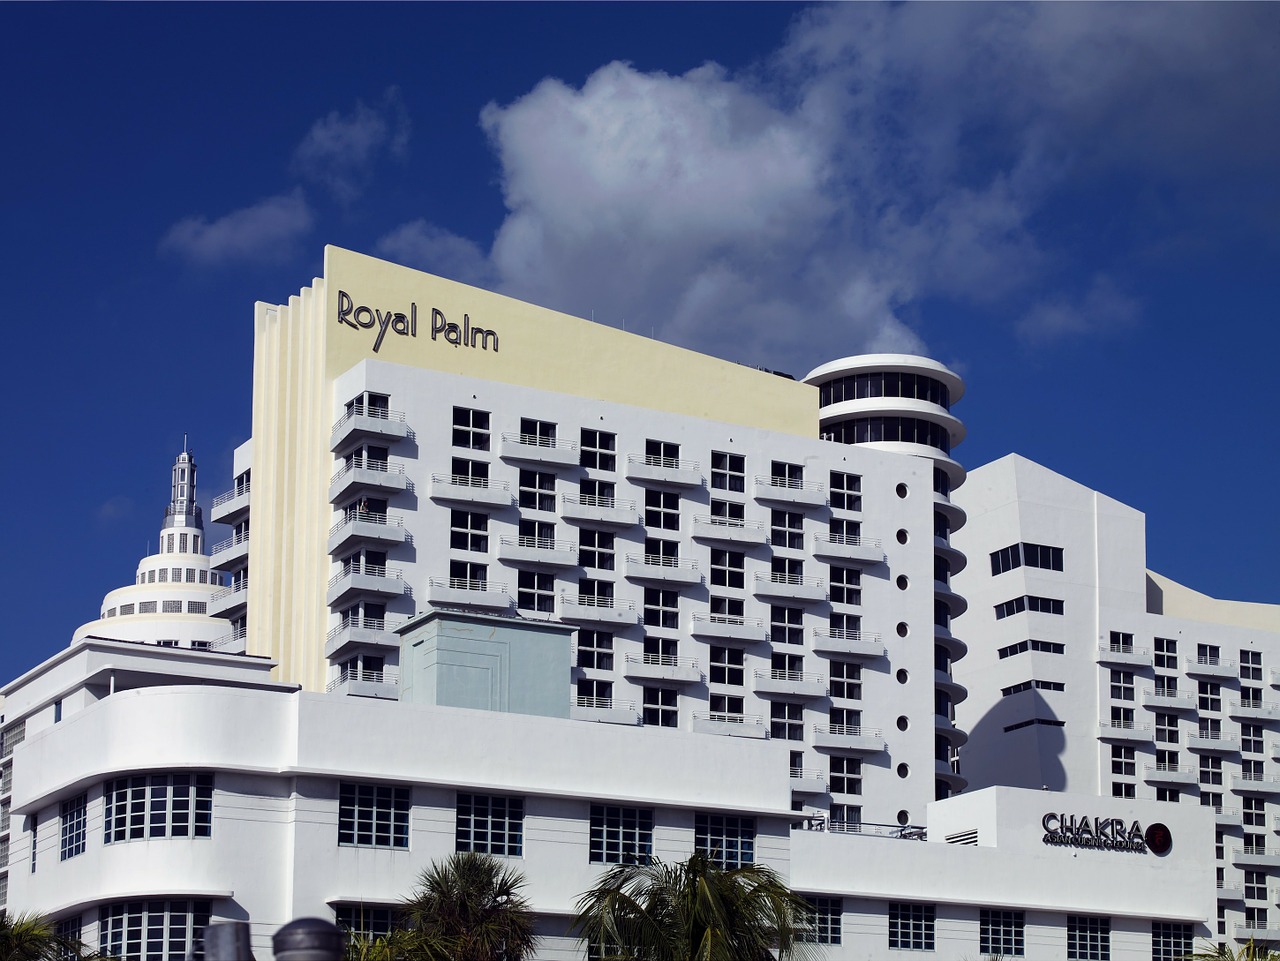 royal palm hotel miami florida free photo